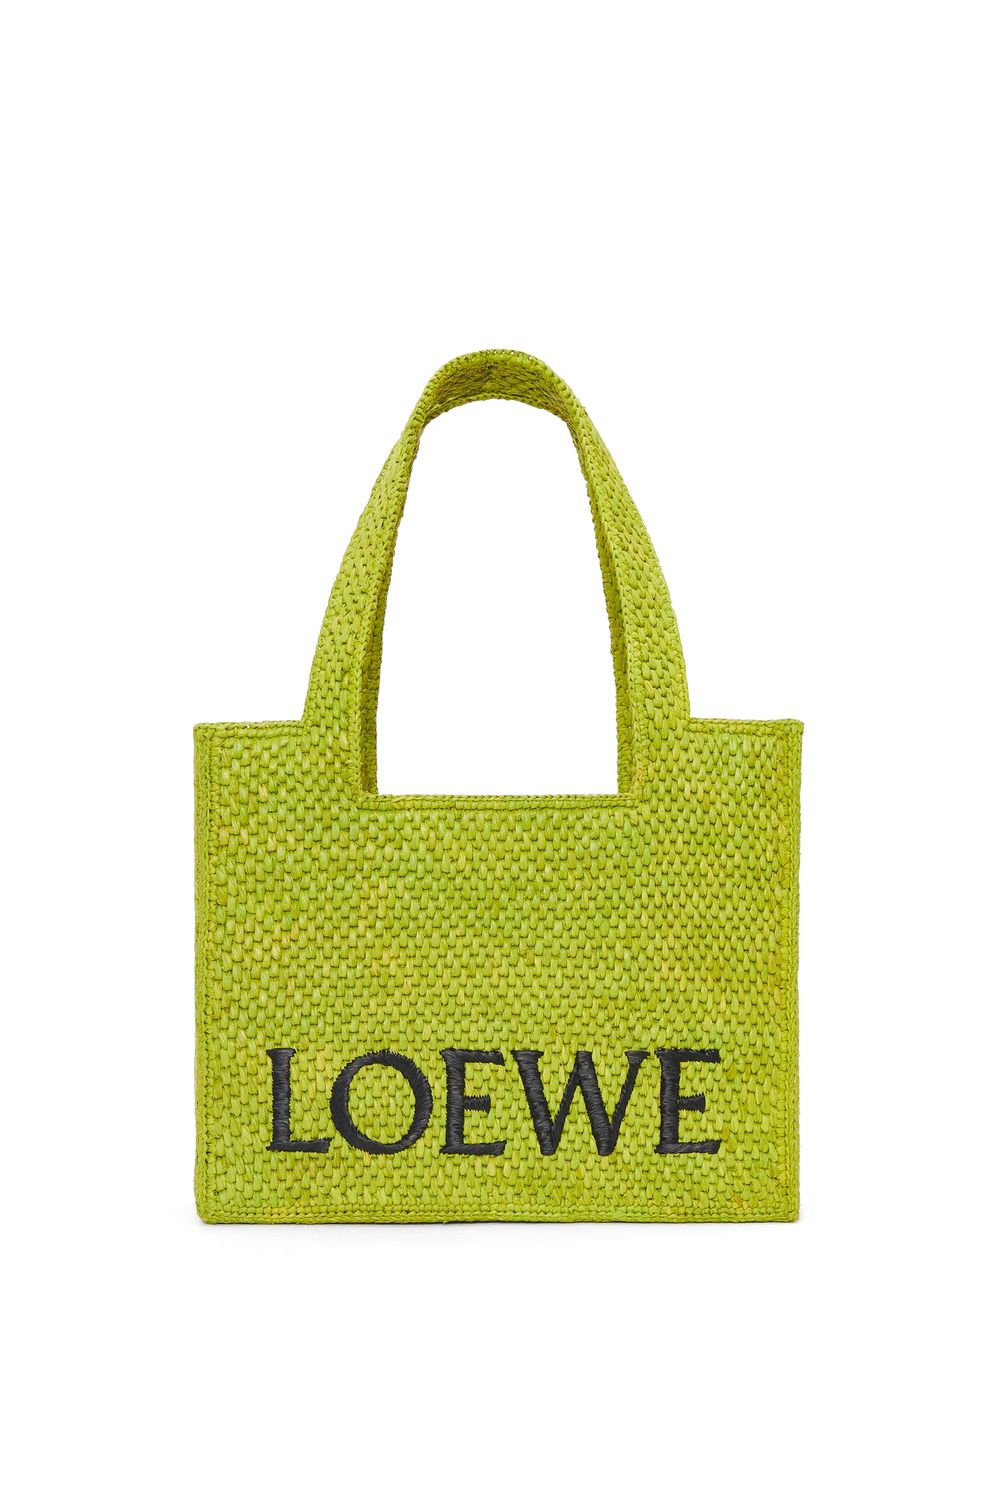 Medium Font Tote Bag by LOEWE